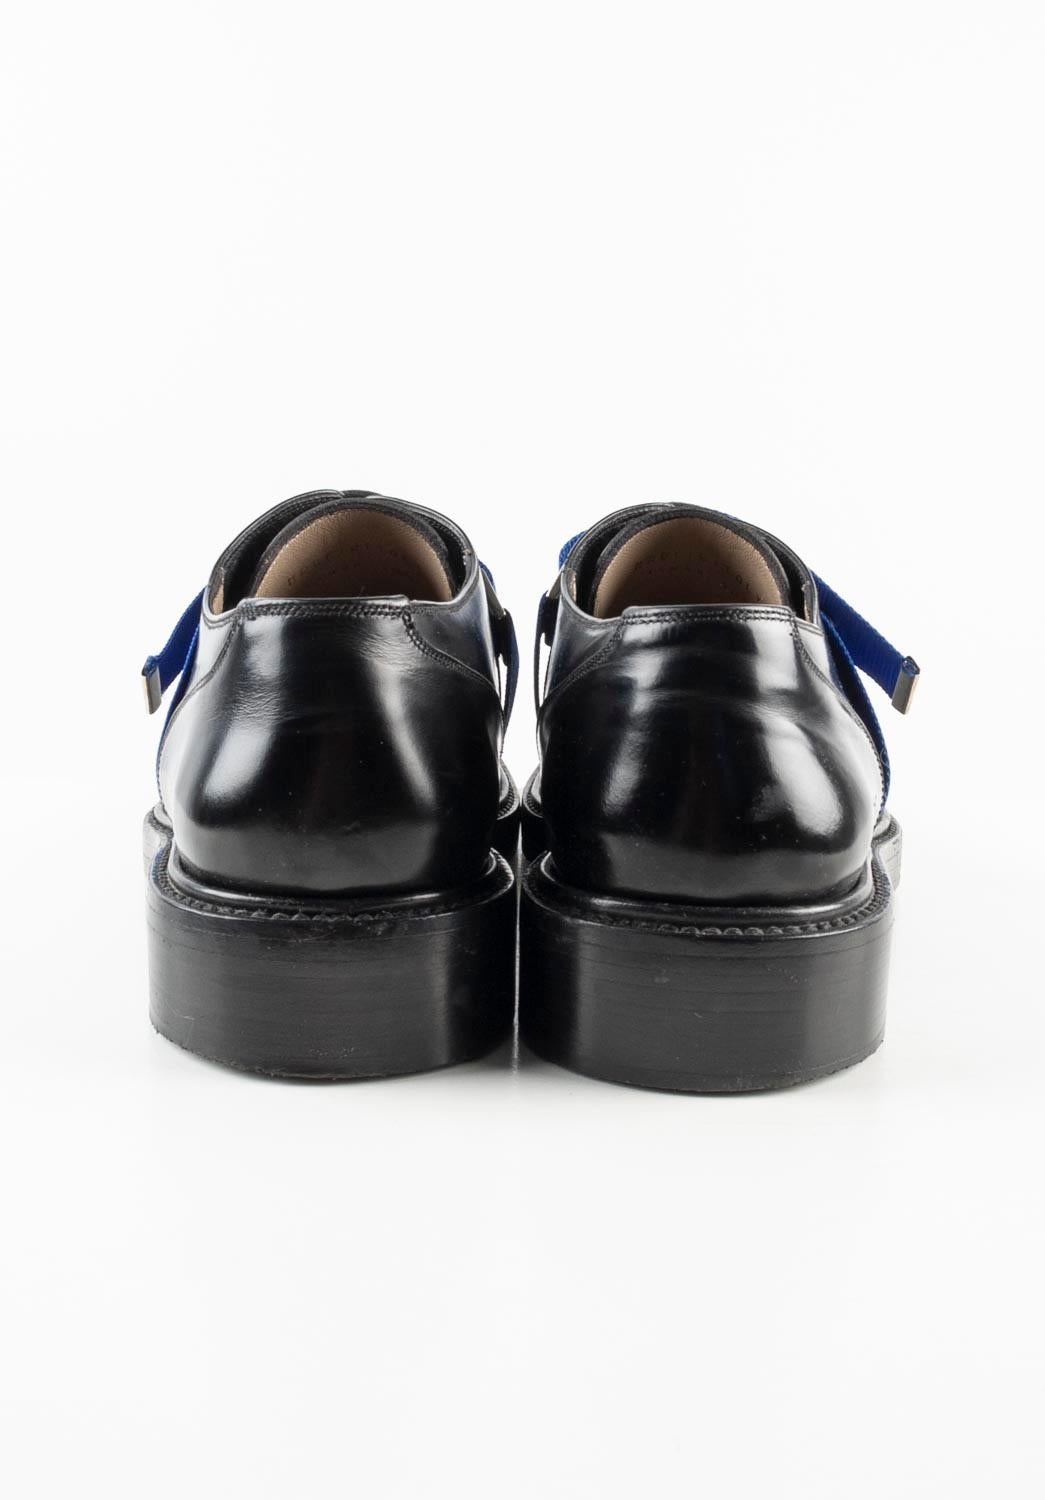 Dior Homme Men Shoes AW15 Derbies Size EUR 40 ½, S693 For Sale 1